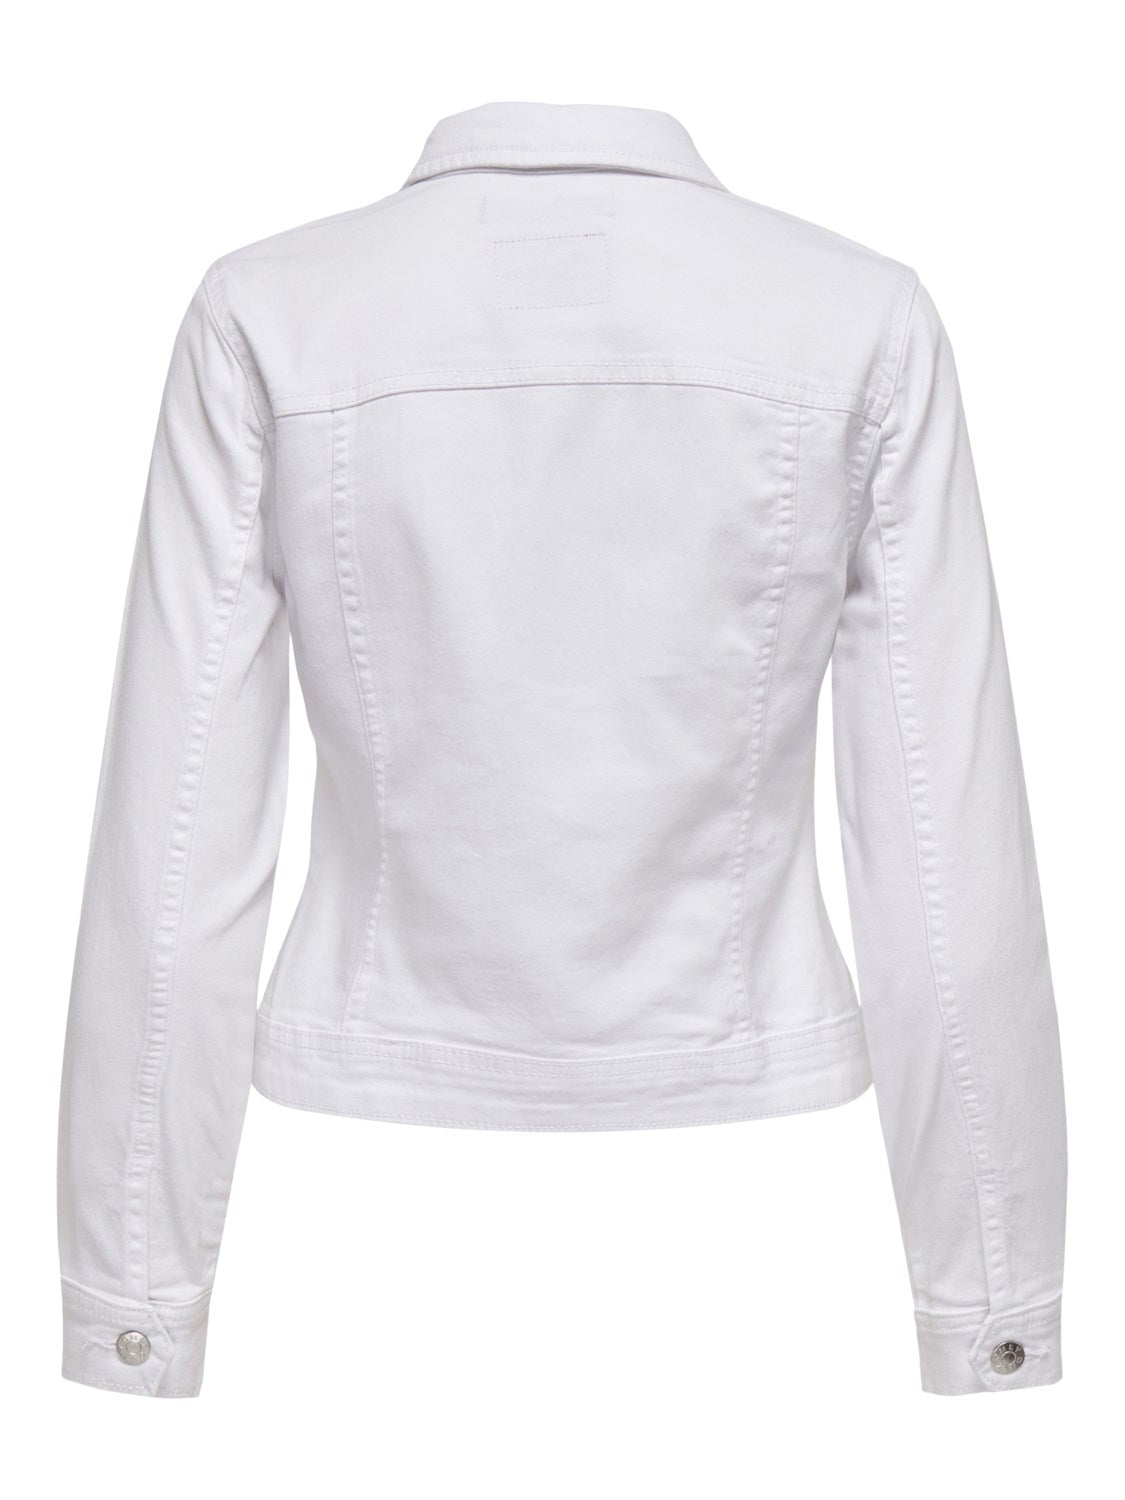 Ladies Wonder Denim Jacket-White-Back View